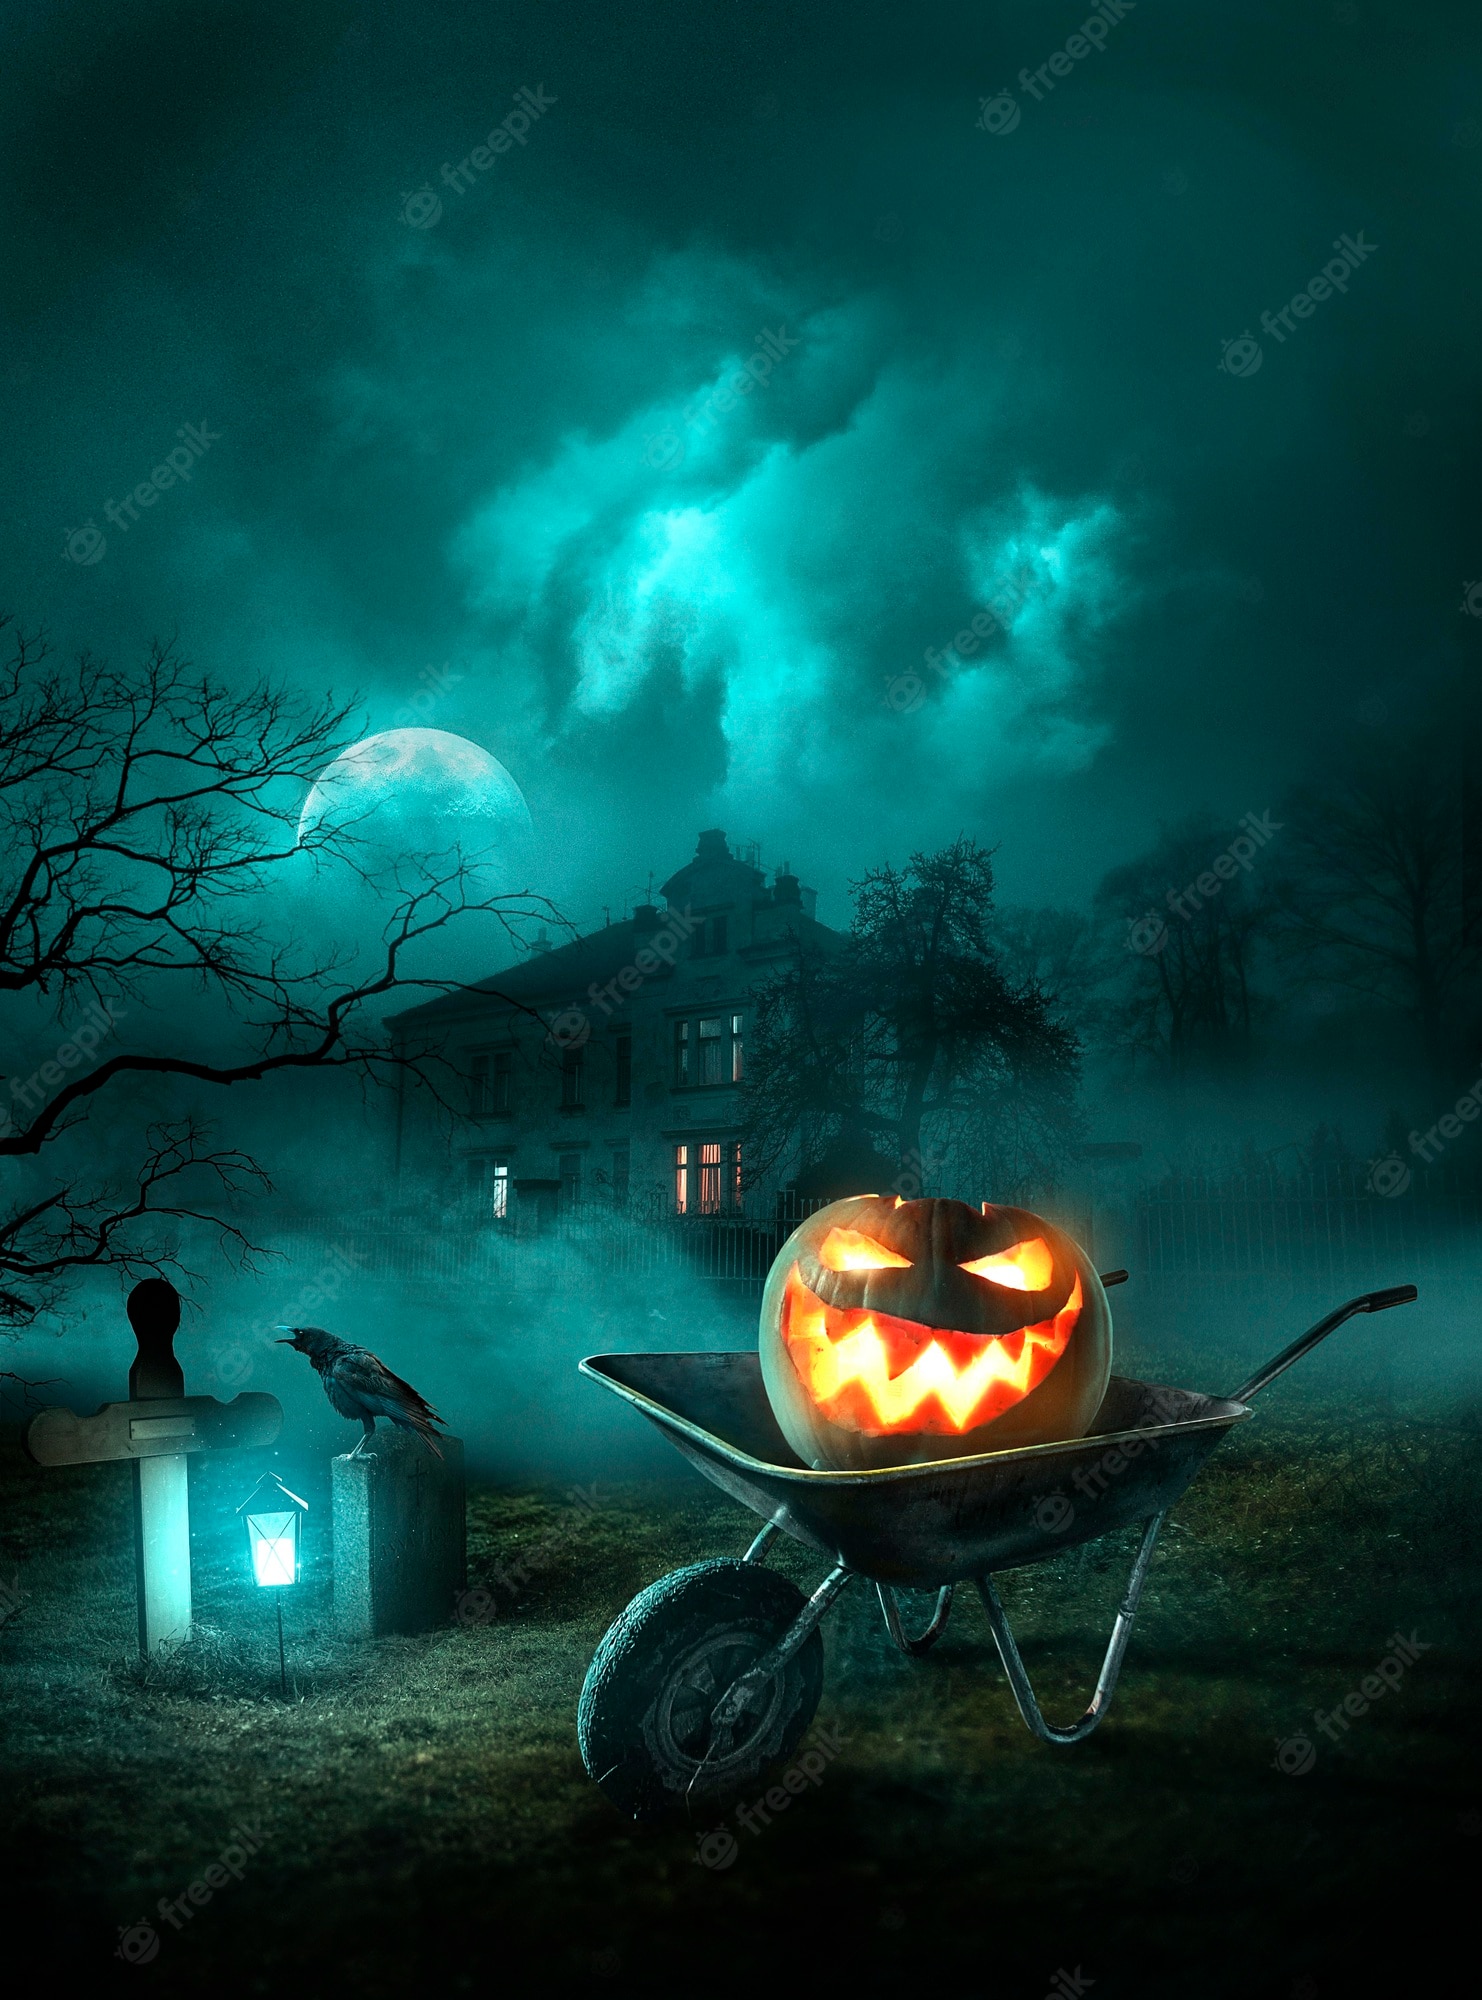 Wallpaper halloween background Image. Free Vectors, & PSD